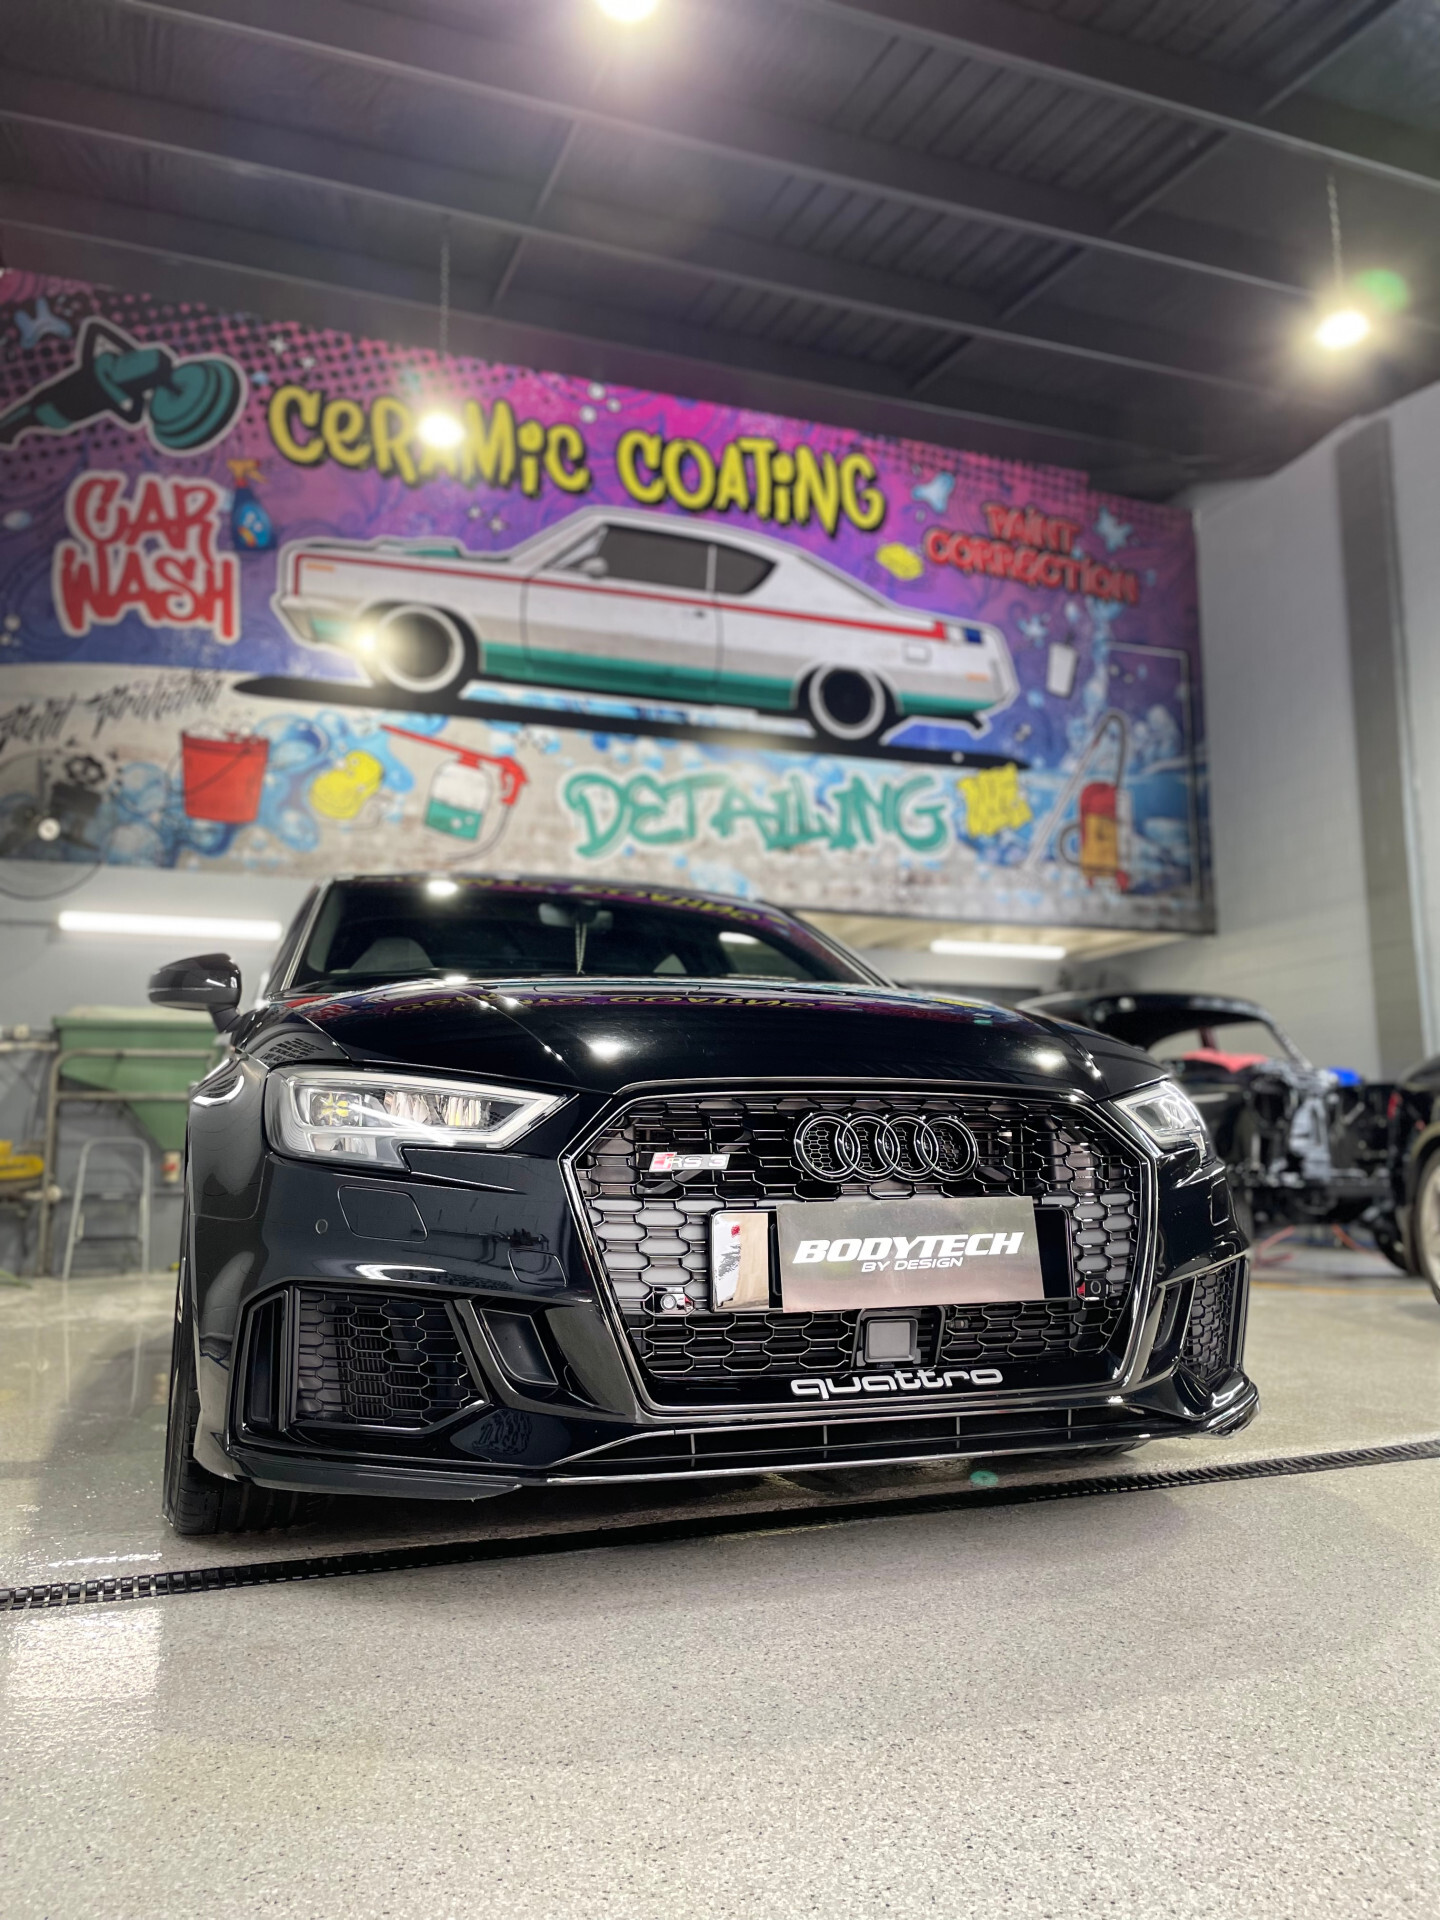 Smash repairs & painting for Audi in Sydney